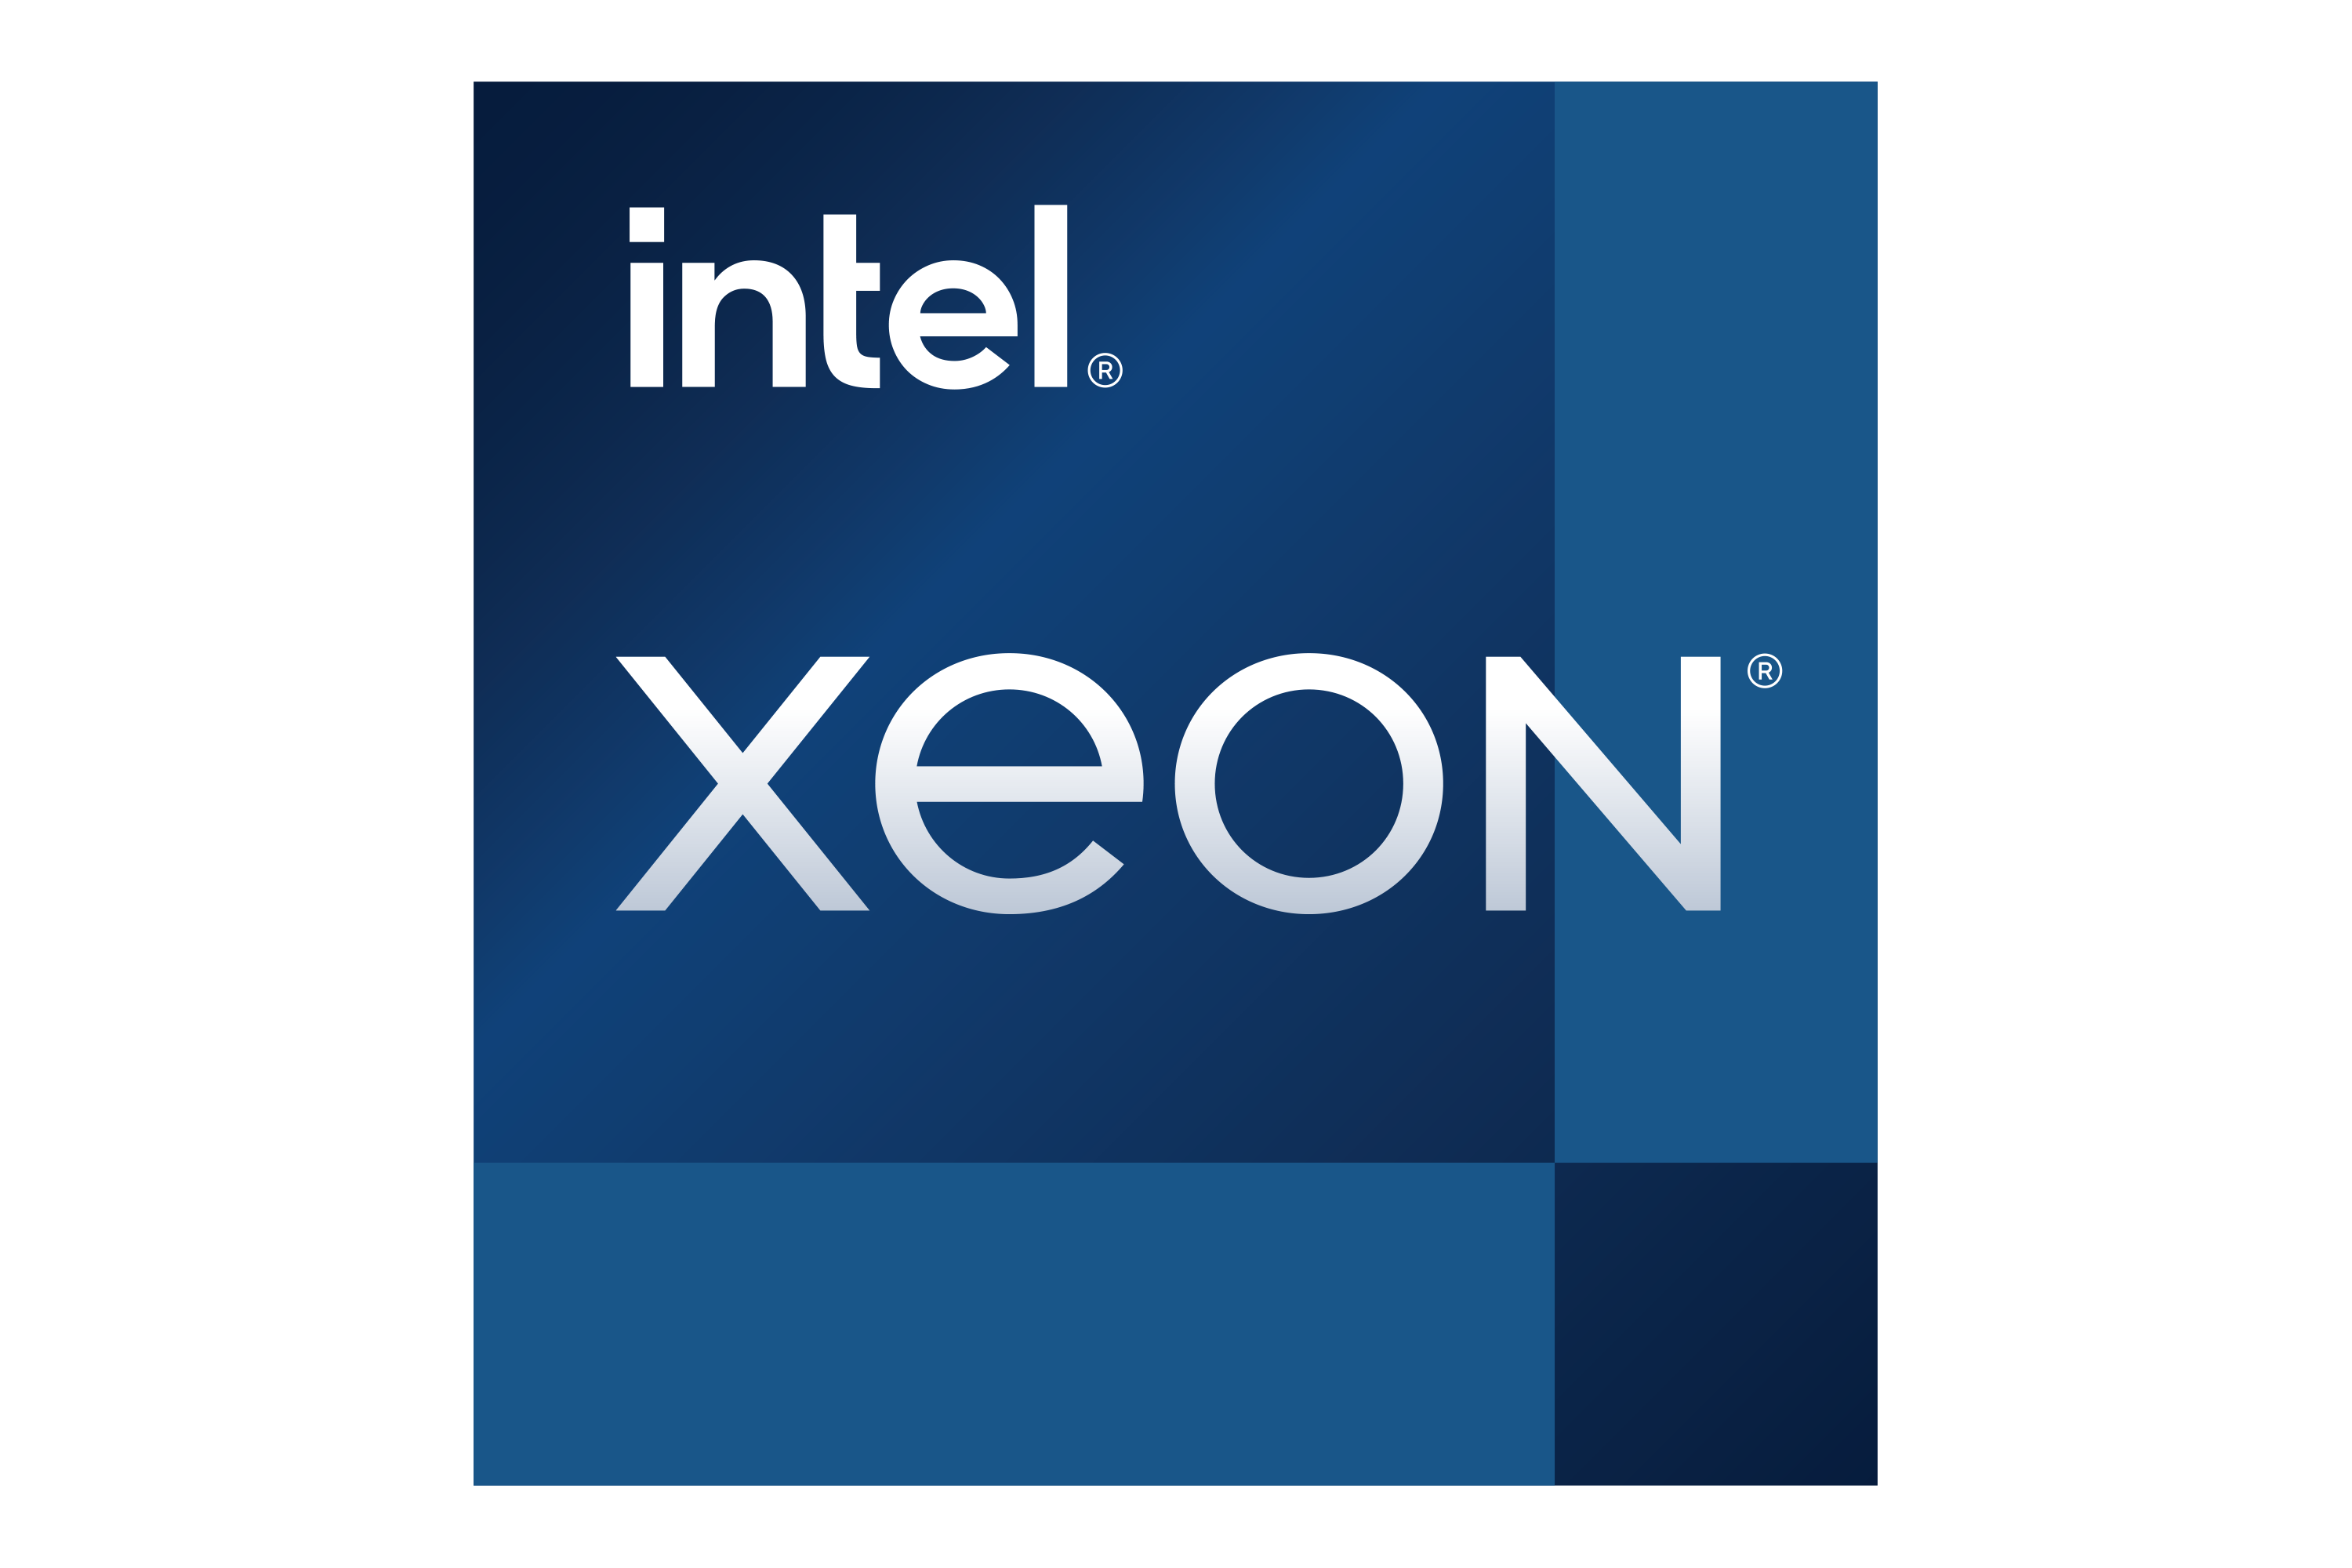 Intel Xeon E5-2600v4